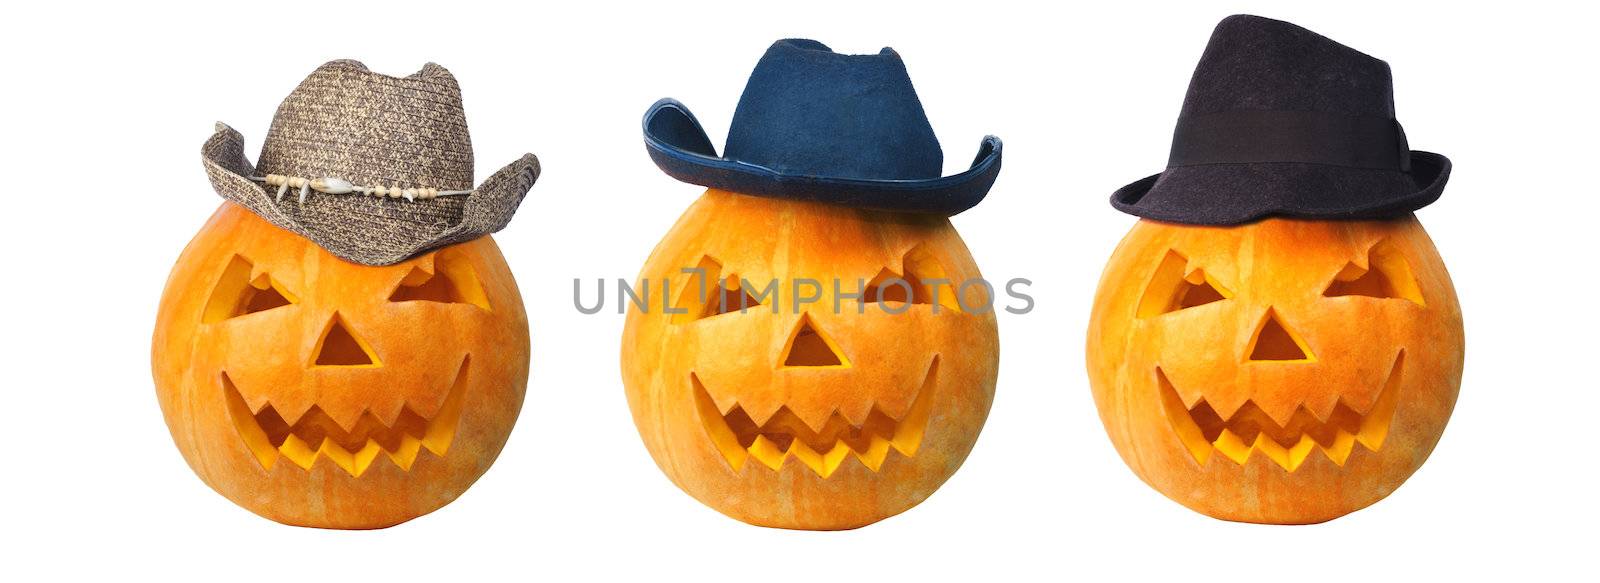 Three cowboy pumpkins by Nickolya